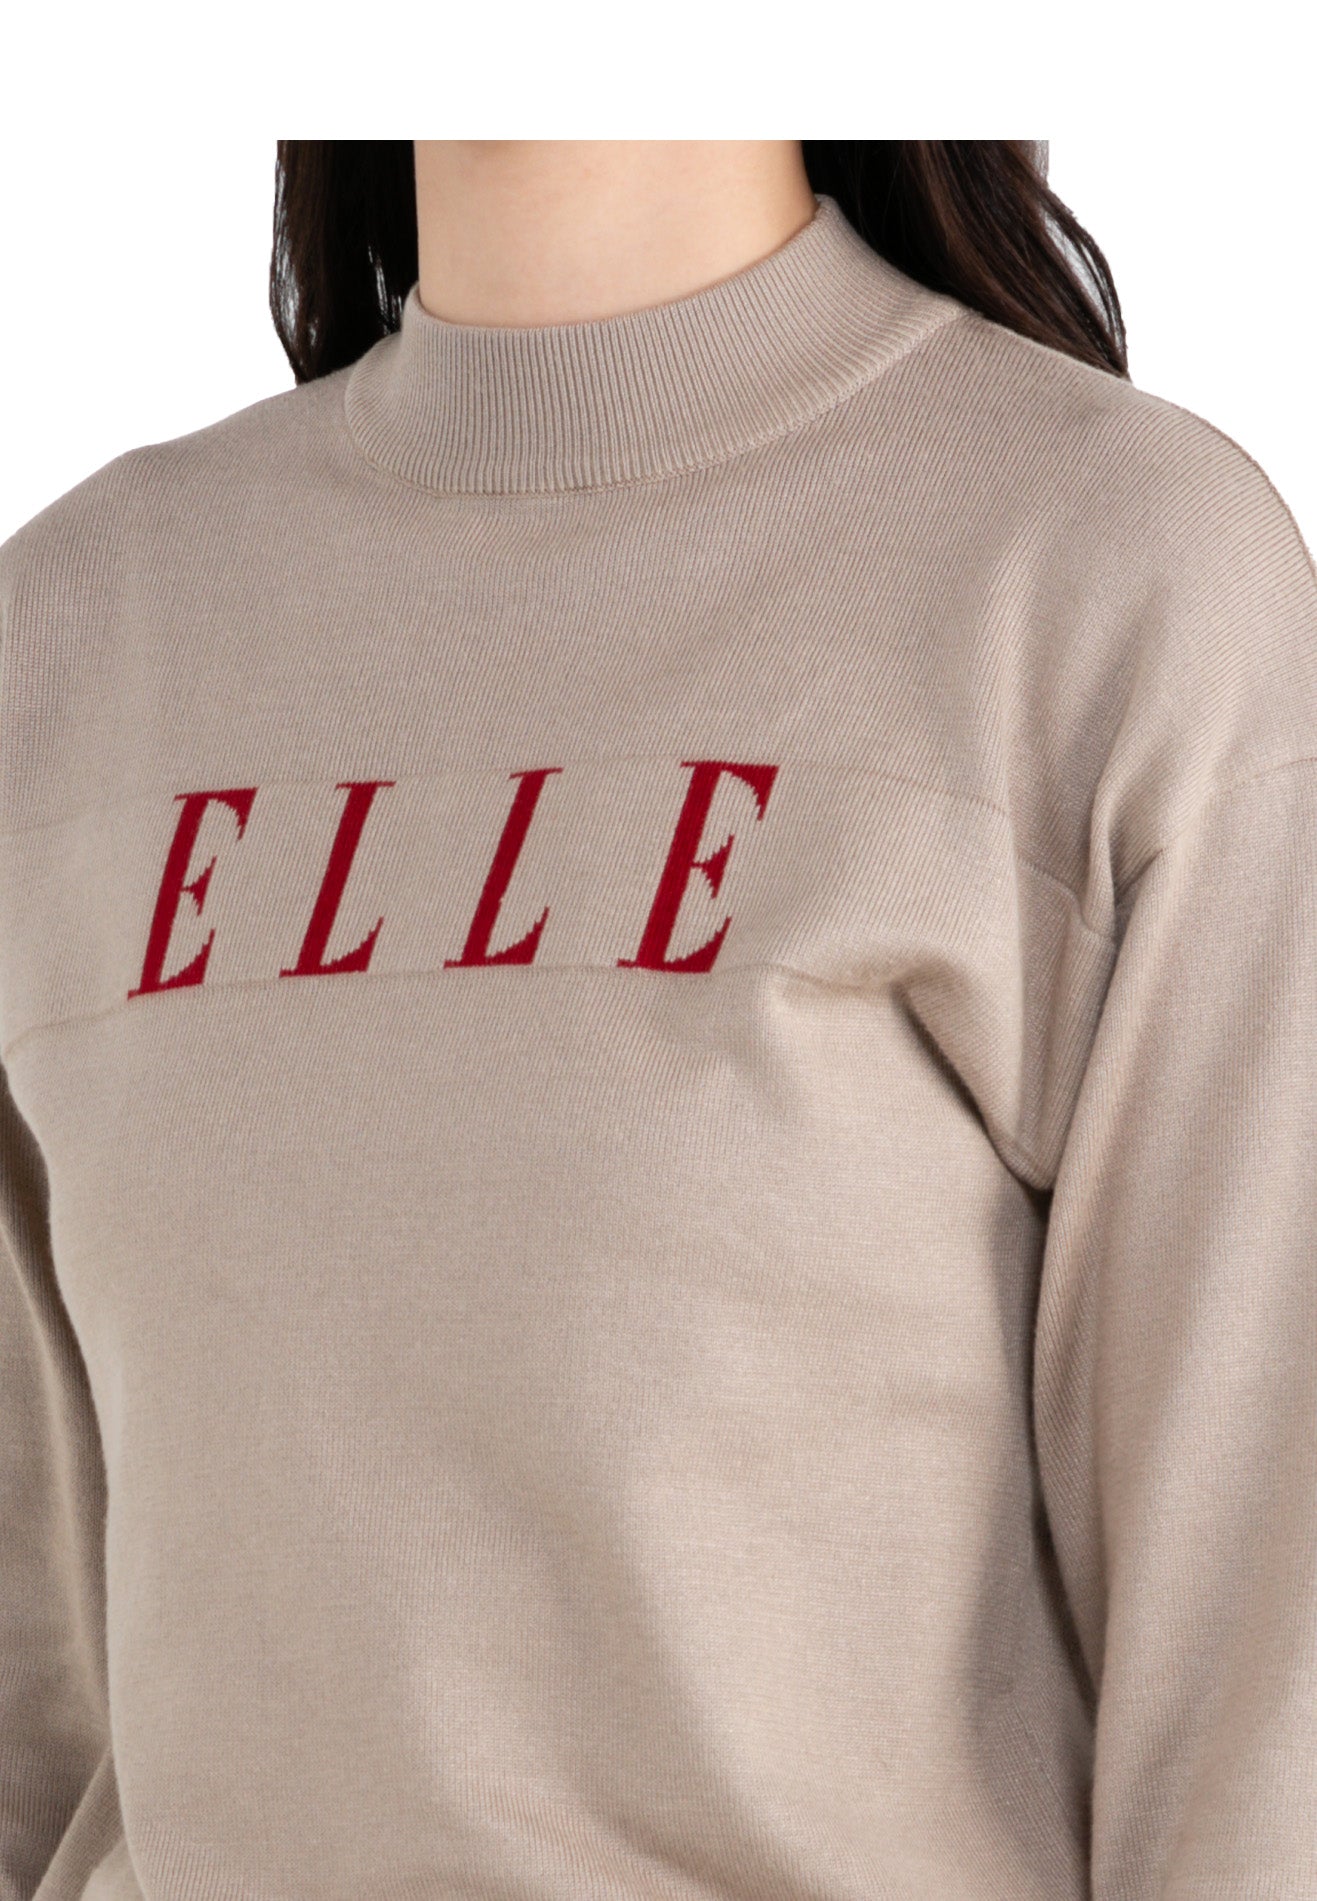 ELLE Apparel Knitted Mock Neck Logo Long Sleeves Sweater